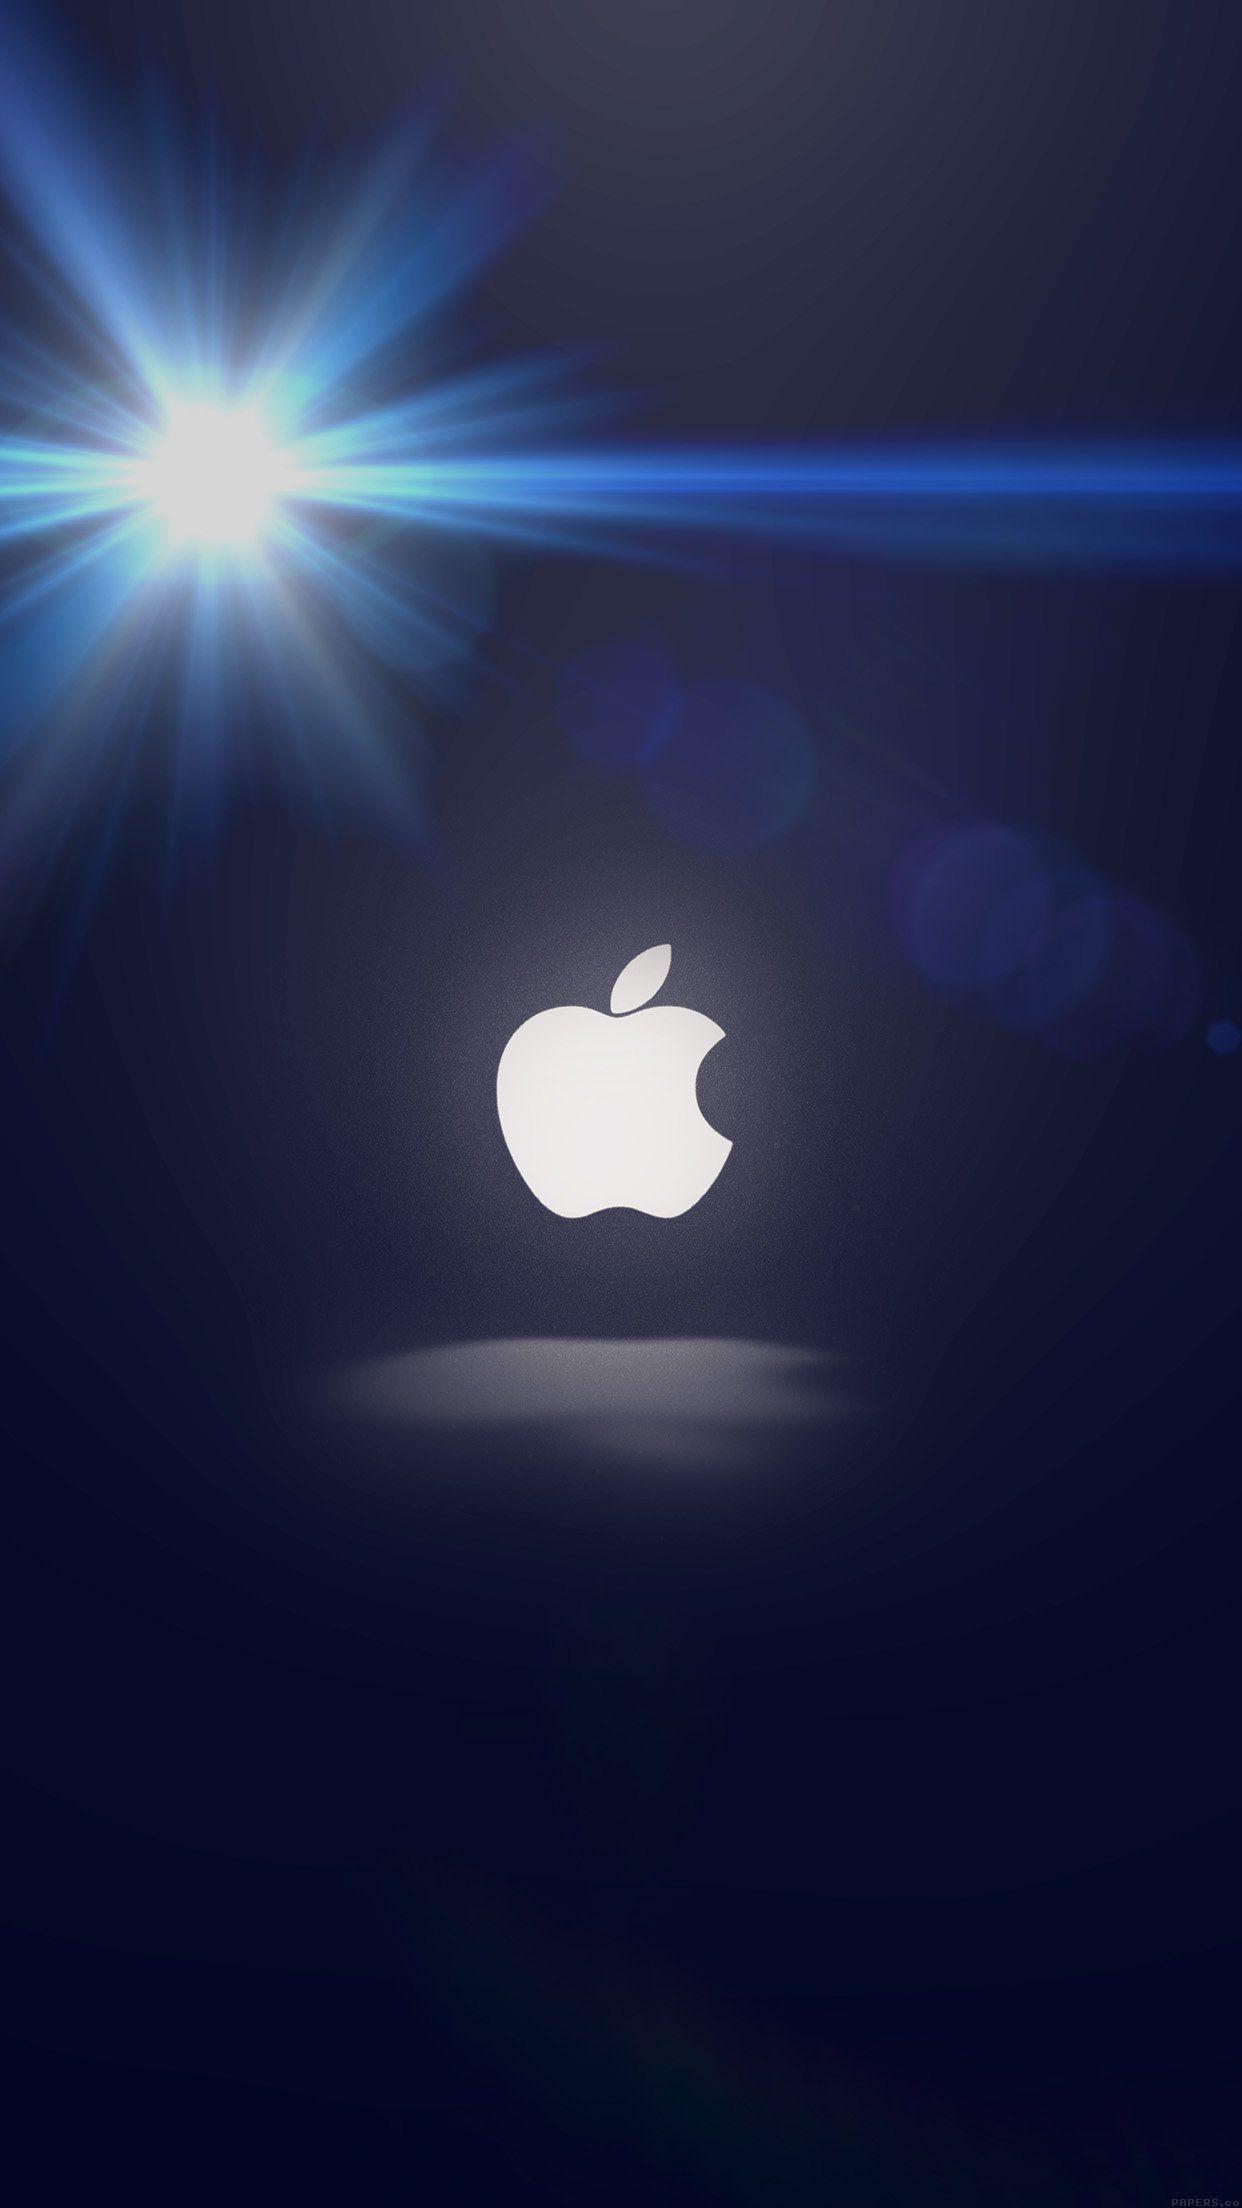 Dark blue theme with white apple logo iphone HD wallpaper. iPhone